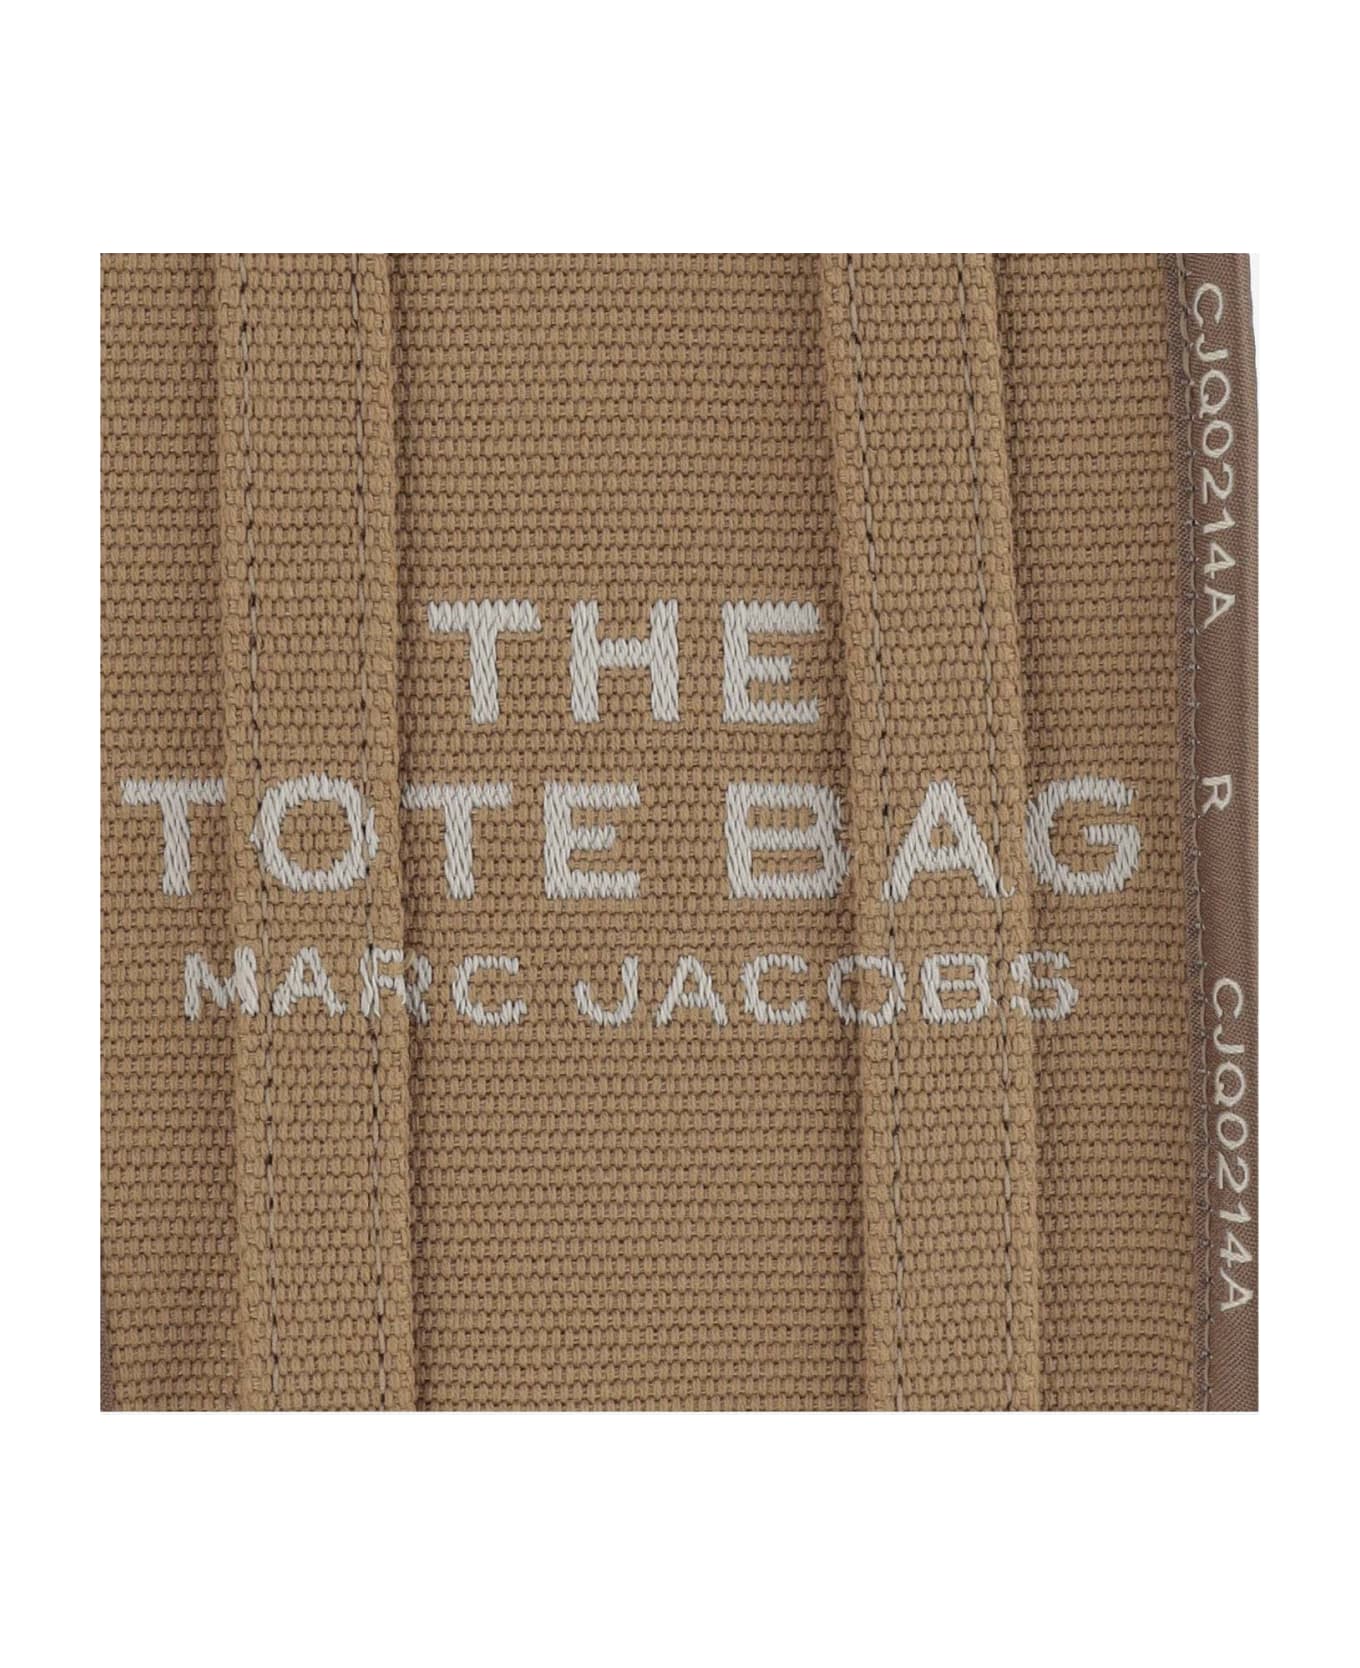 Marc Jacobs The Jacquard Crossbody Tote Bag - Brown